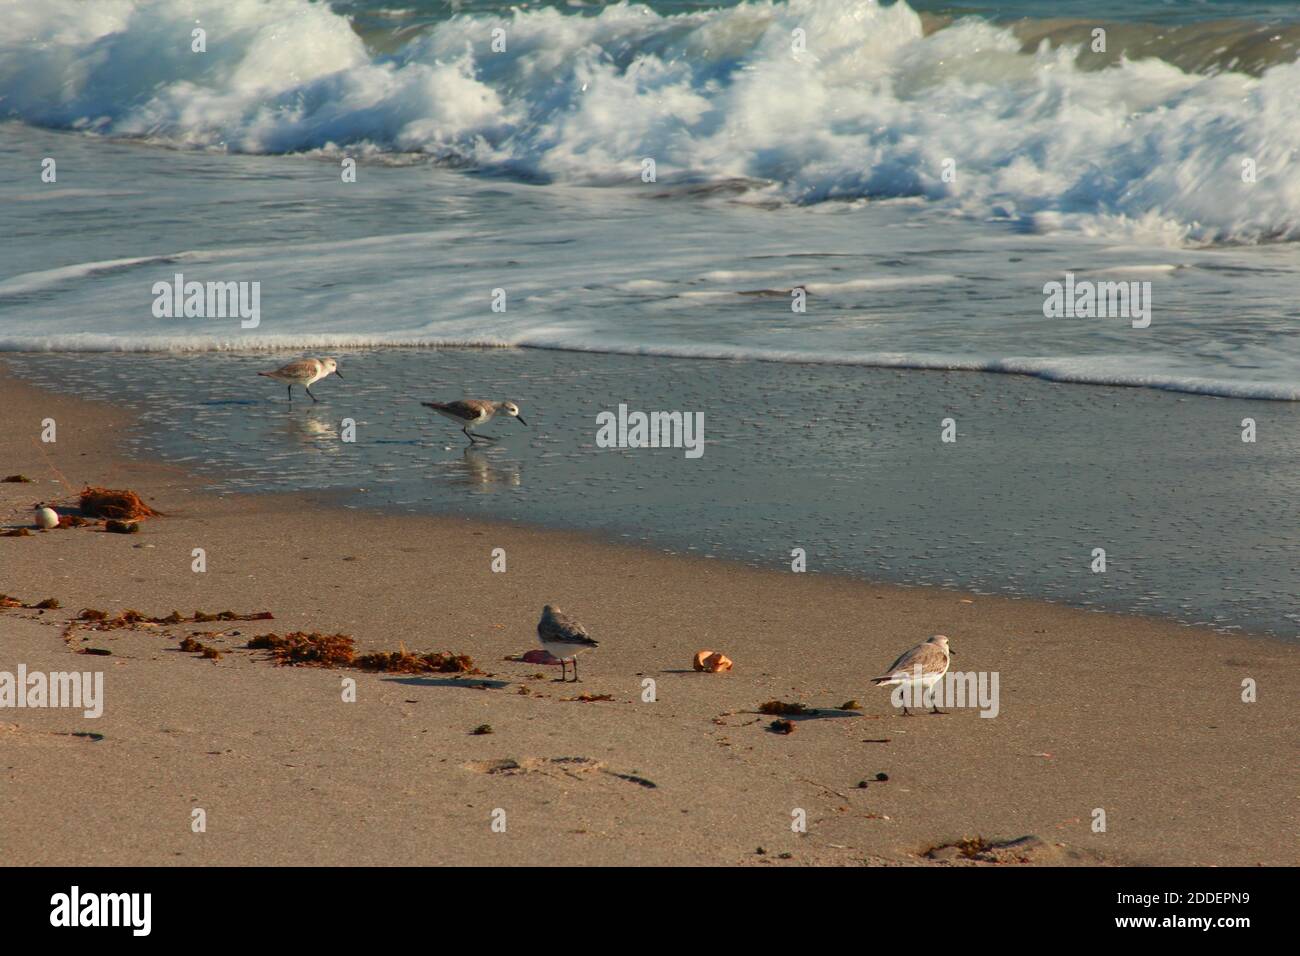 Birds by the waves - medium shot Stock Photo